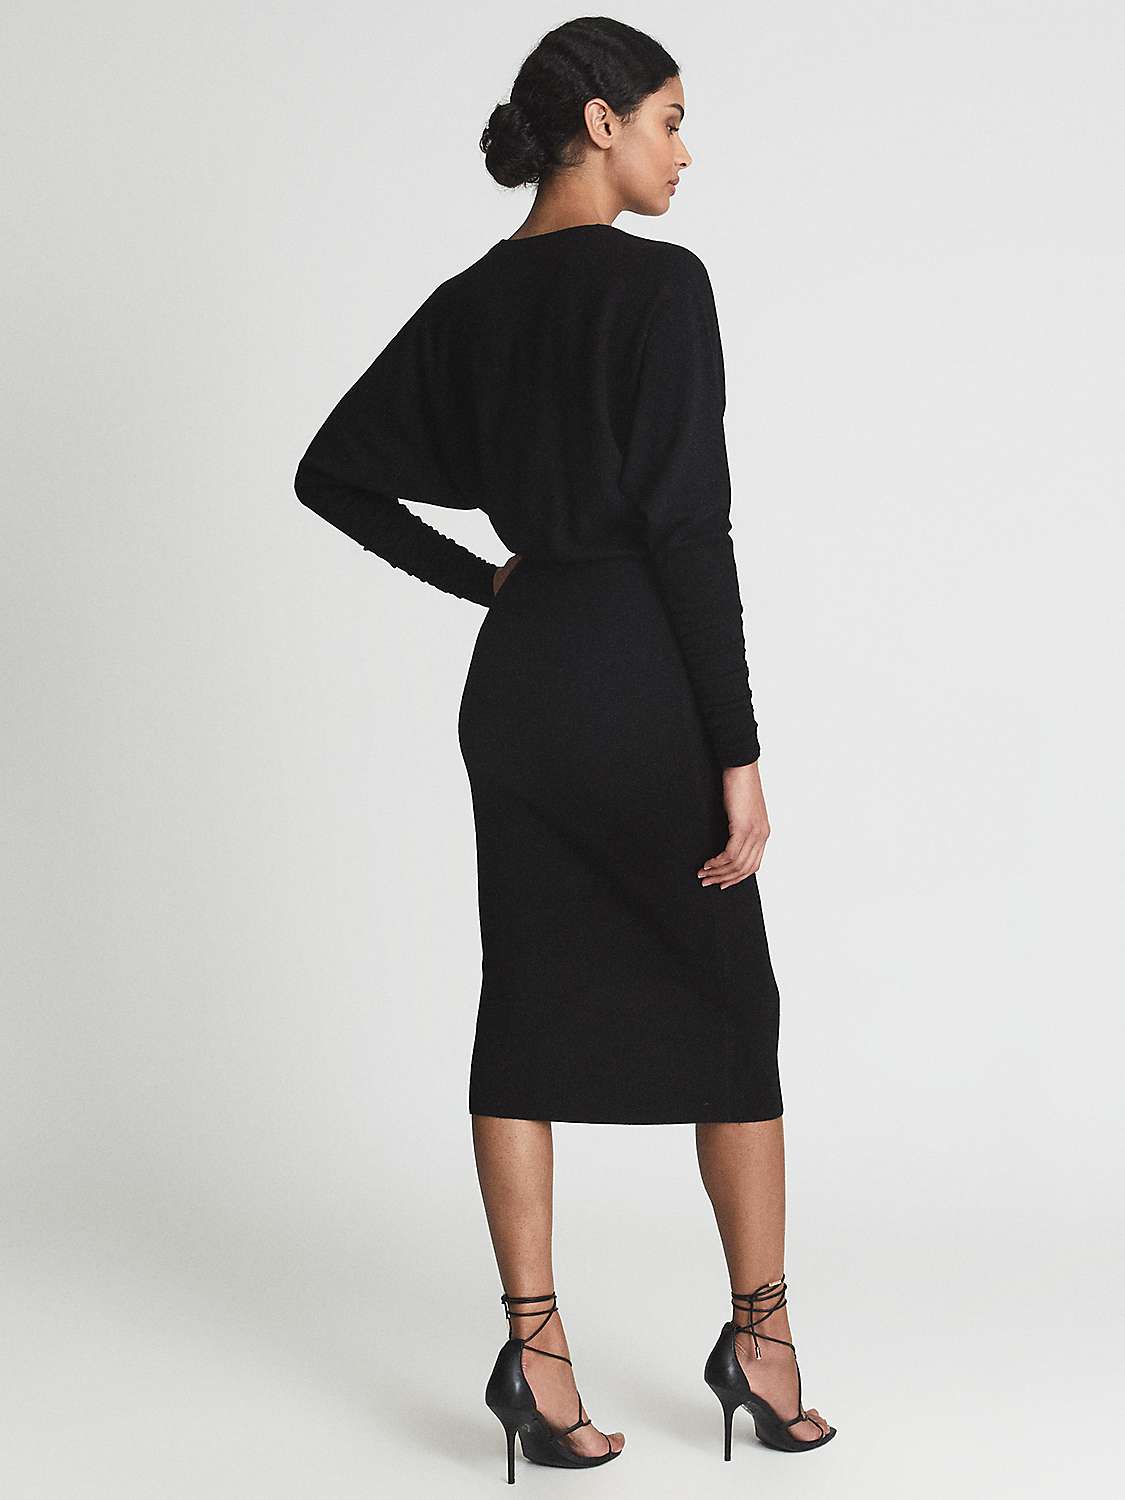 Buy Reiss Jenna Knitted Cashmere Blend Jumper Dress Online at johnlewis.com